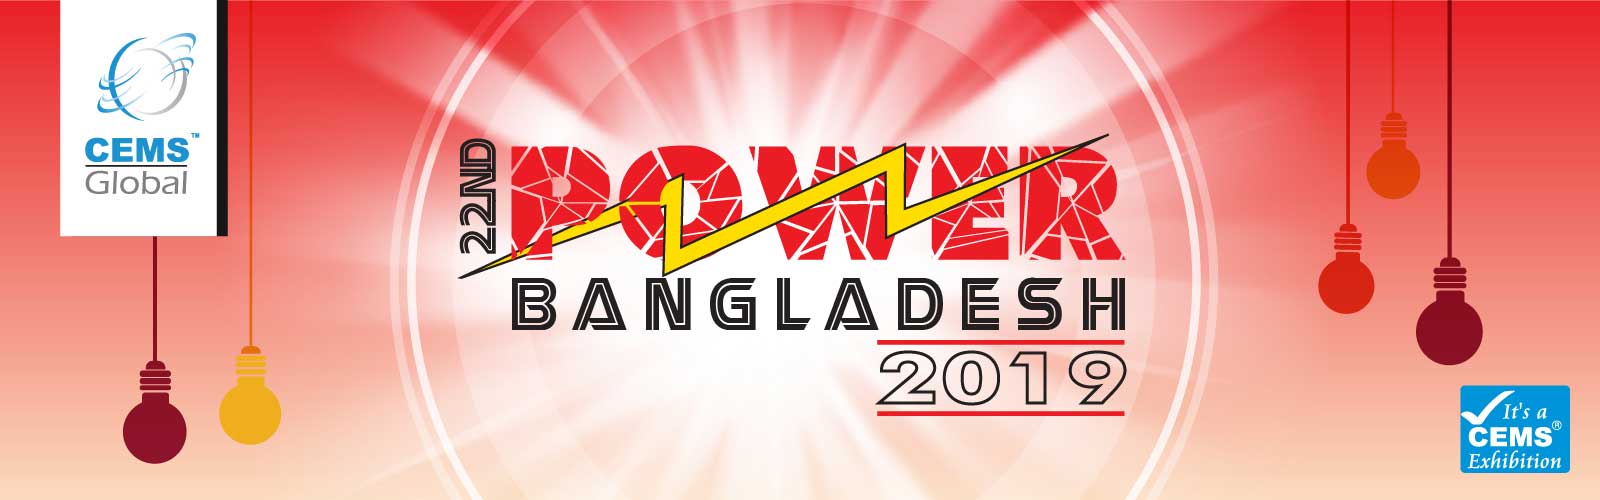  22nd Power Bangladesh 2019 International Expo